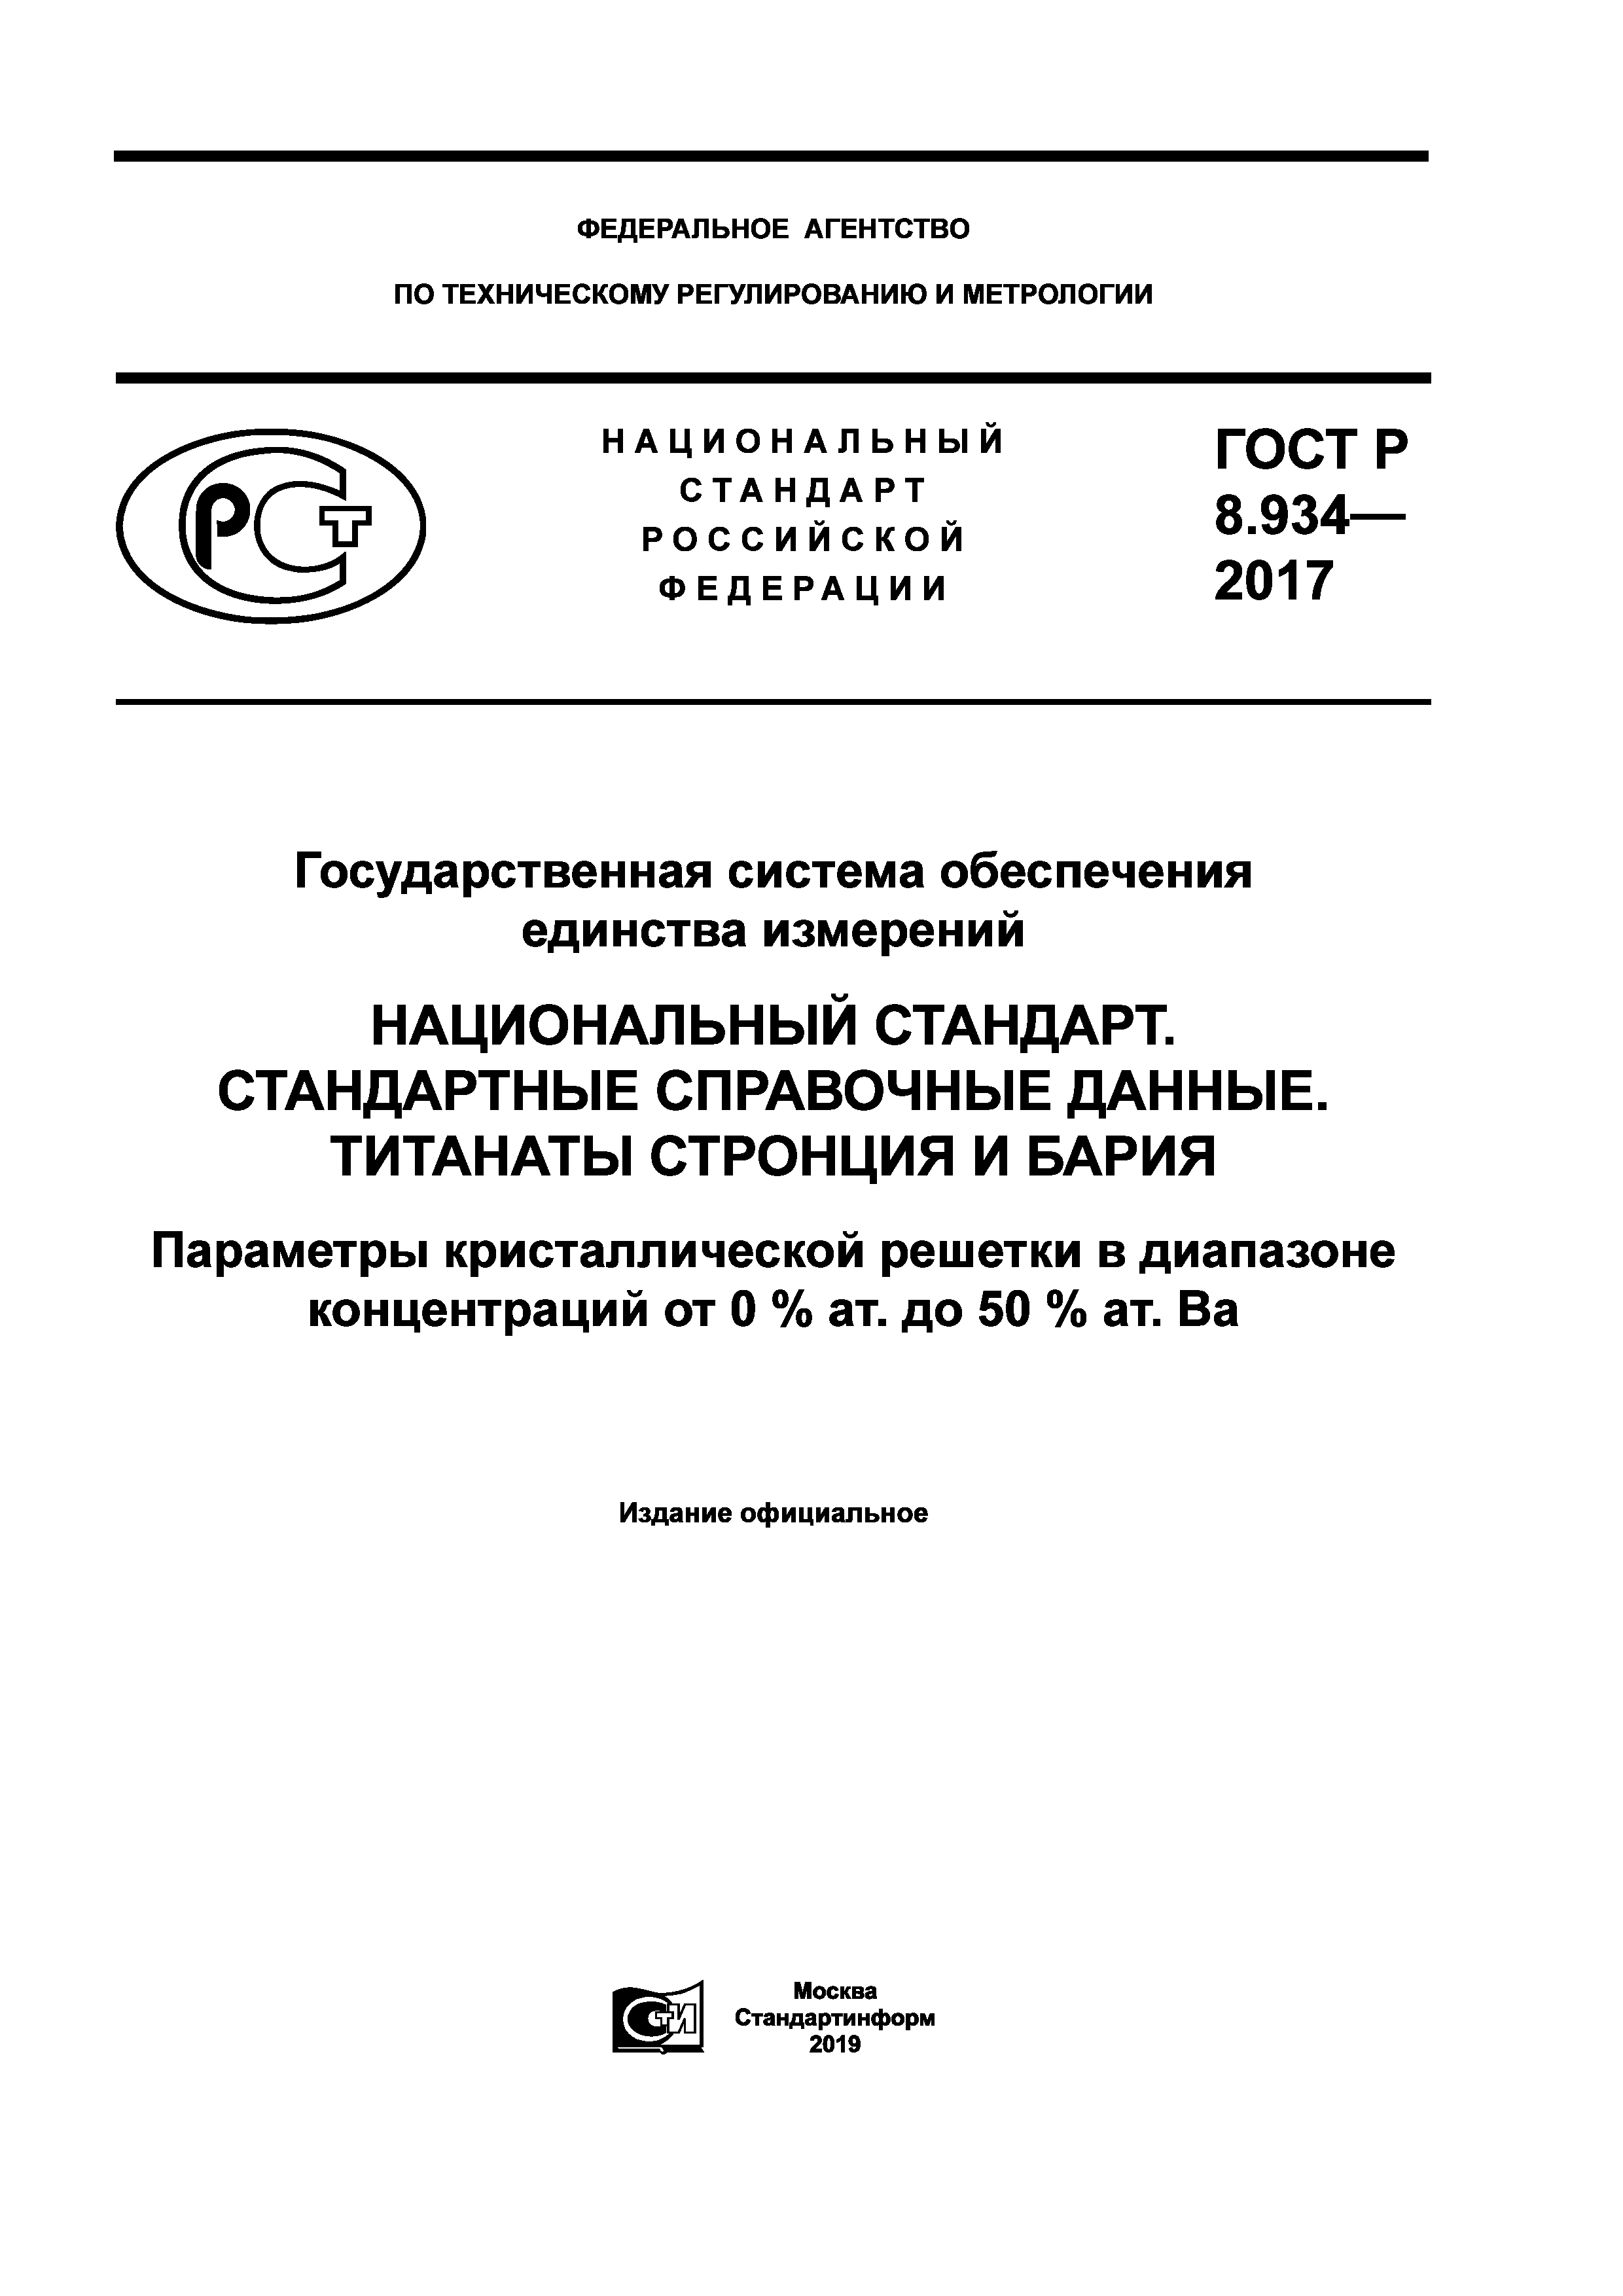 ГОСТ Р 8.934-2017